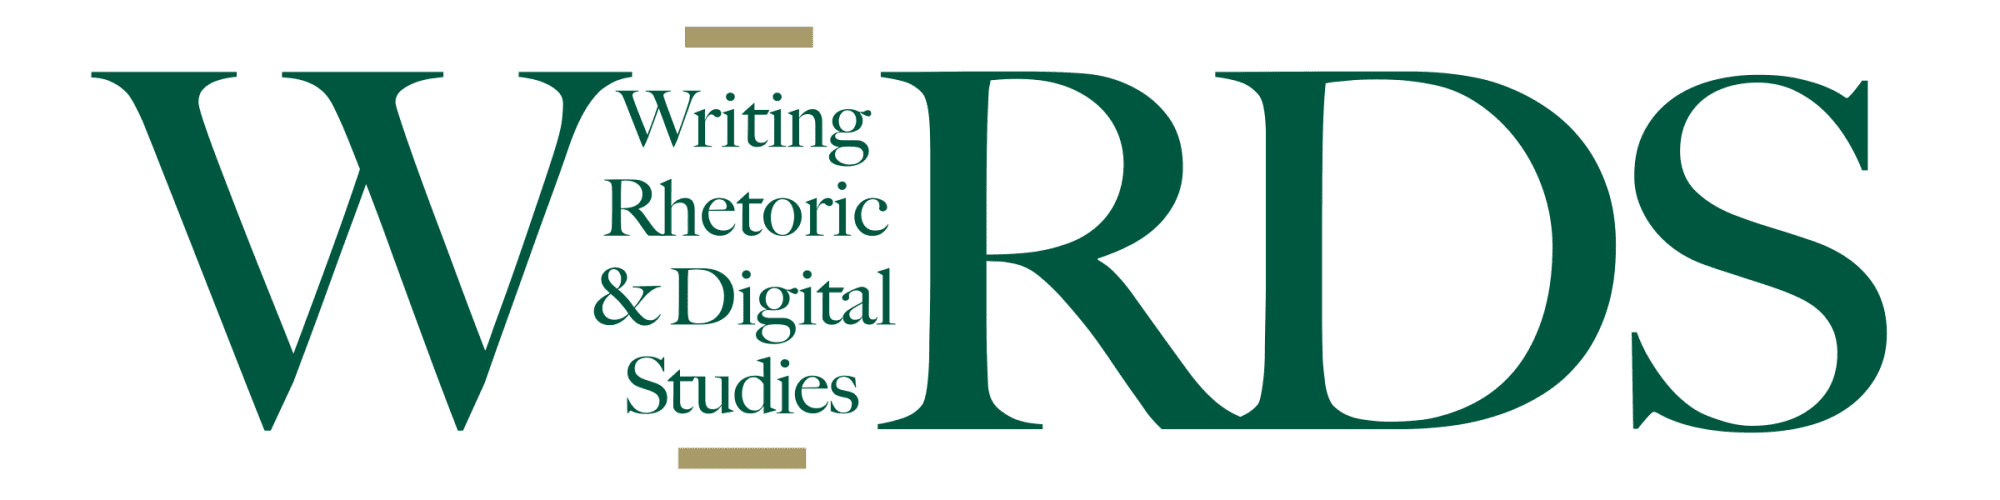 Writing Rhetoric Digital Studies Logo